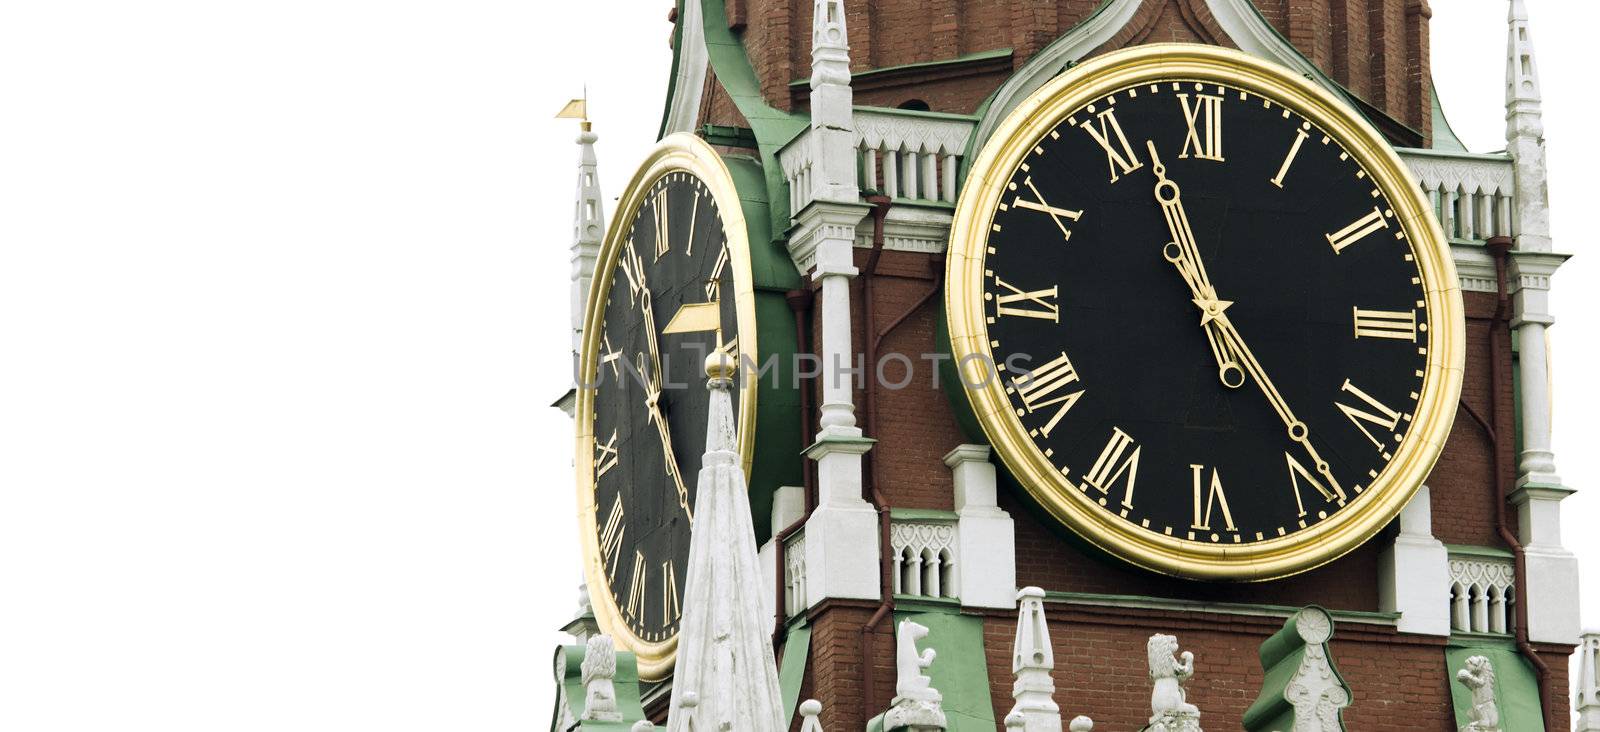 Old clock on tower (Russia, kremlin chimes) by Kuzma